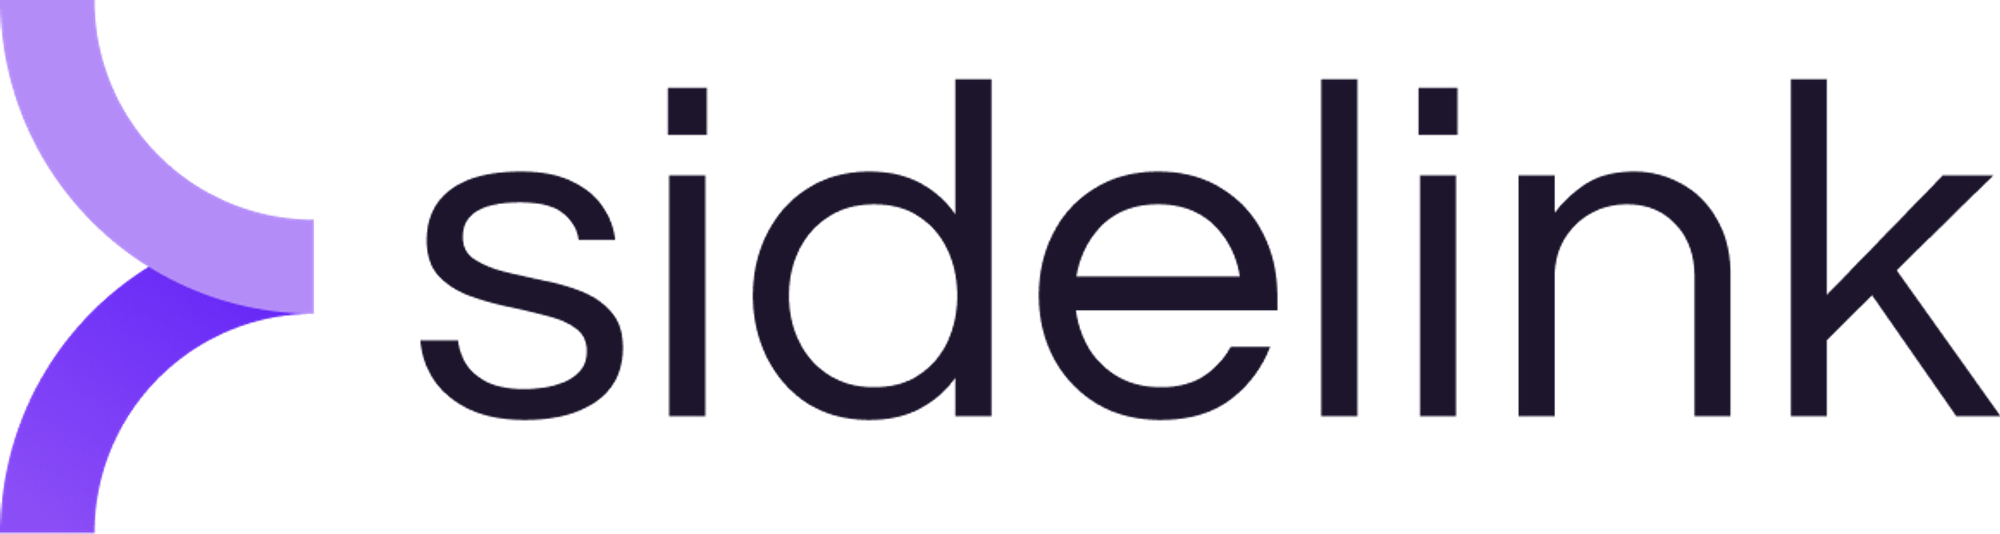 Modern logo design for sidelink.io